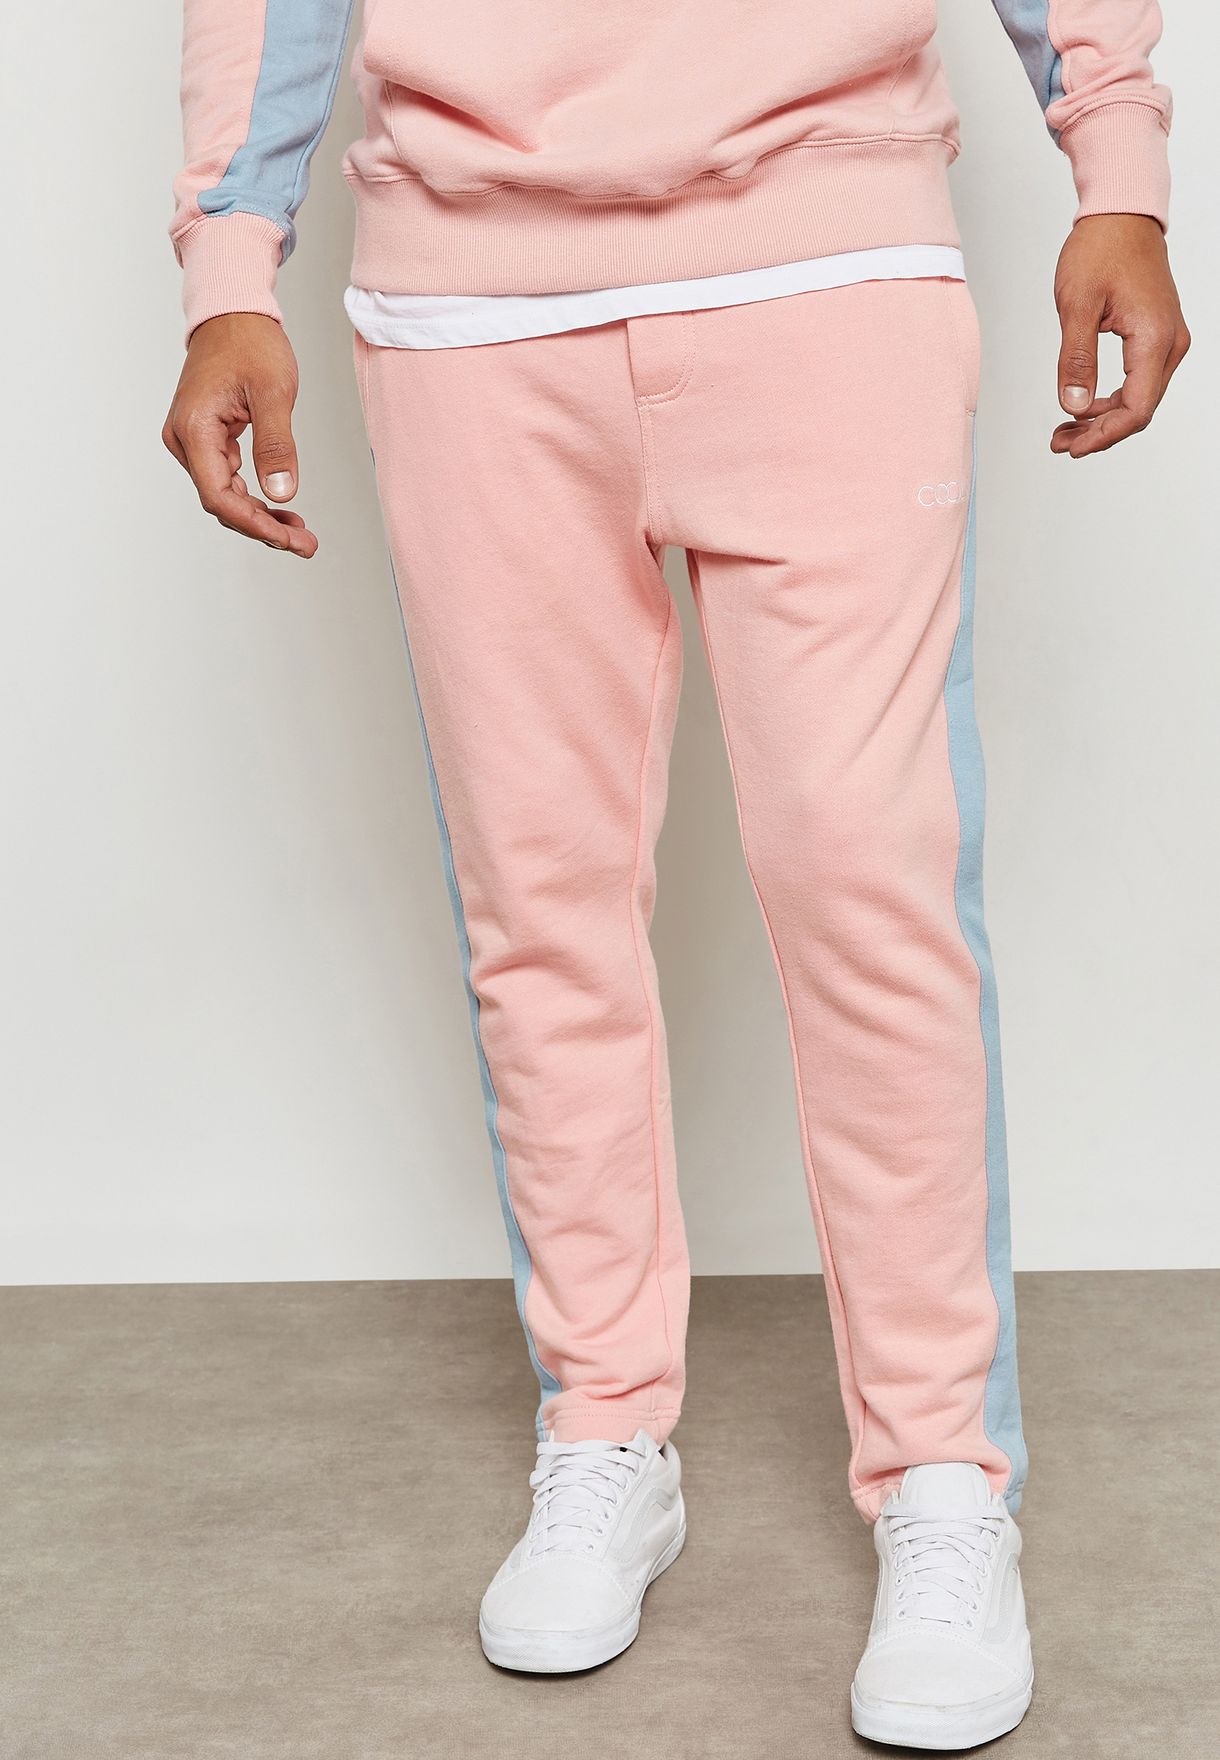 pink track pants mens